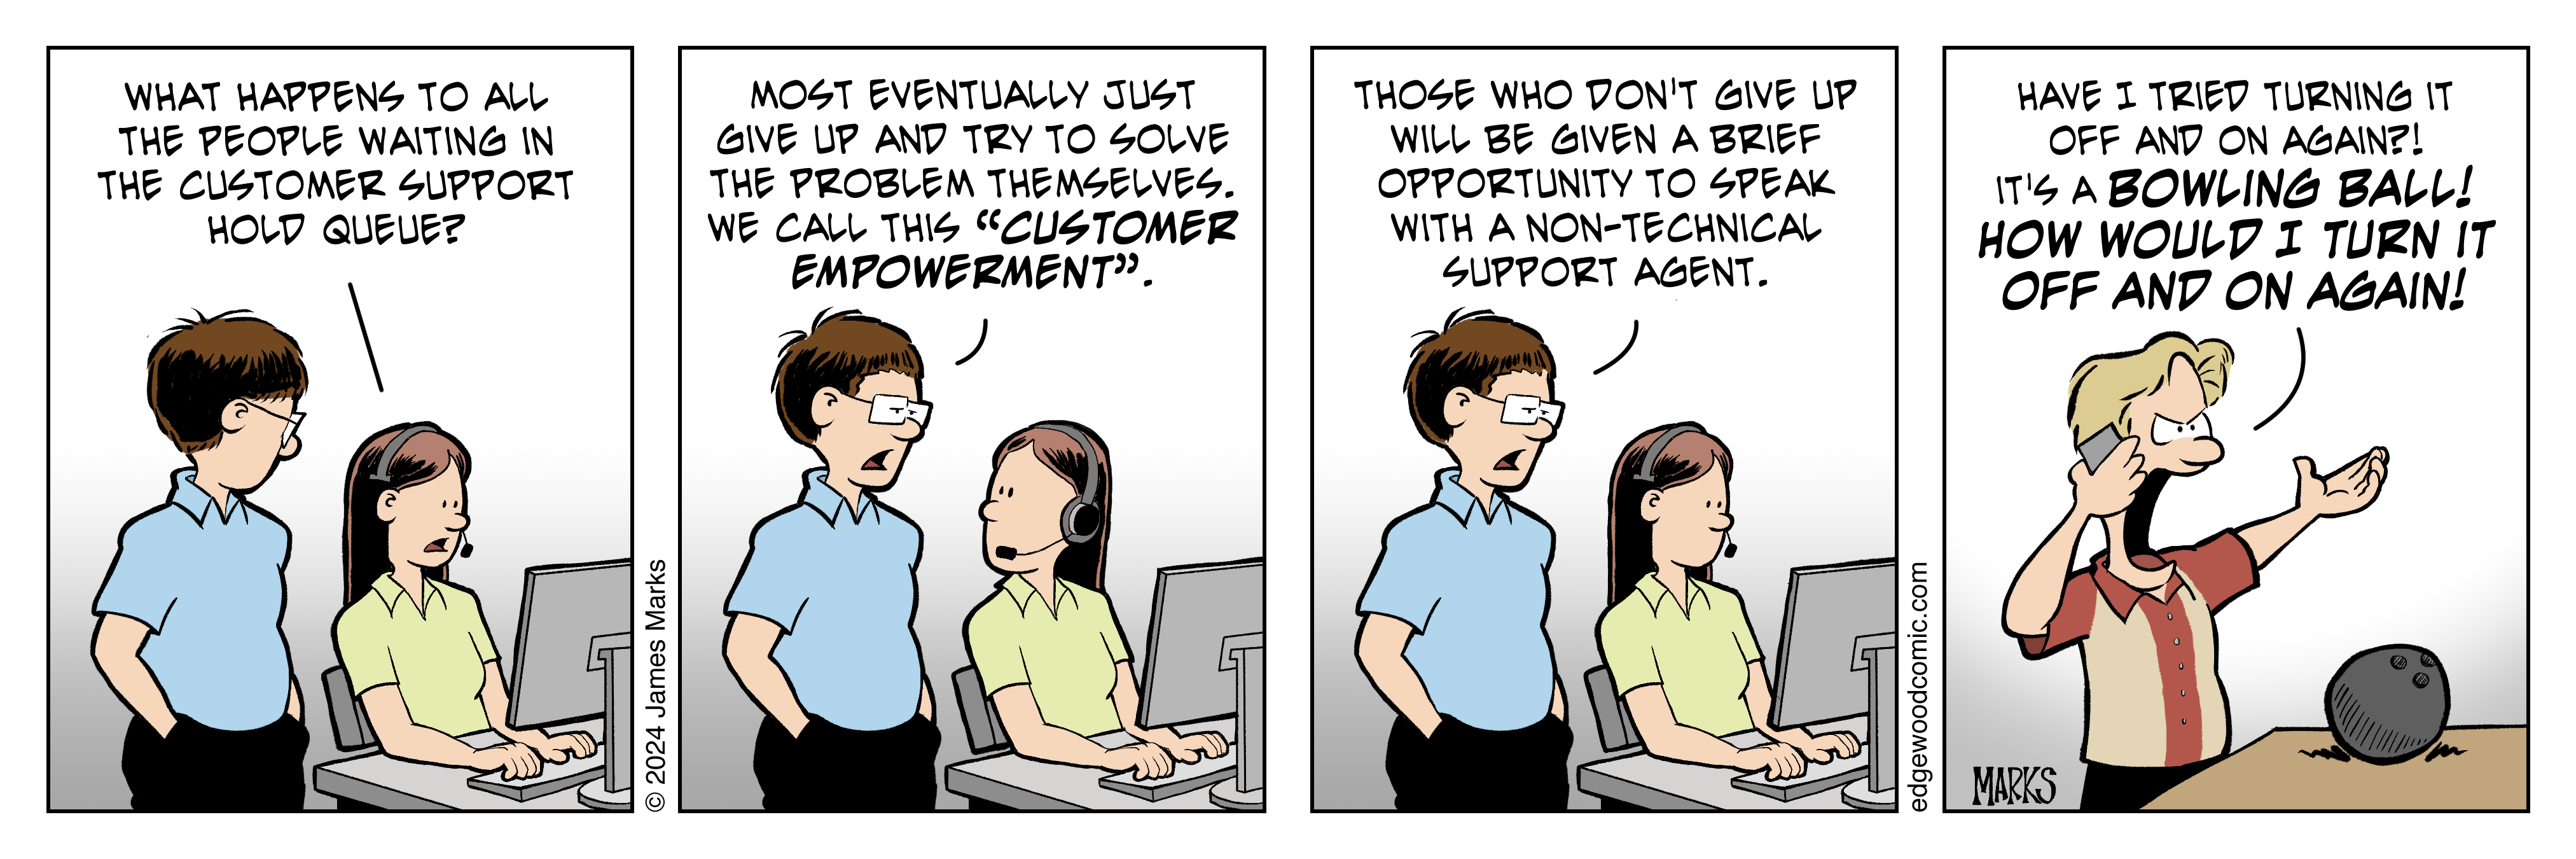 Customer support 2 comic strip